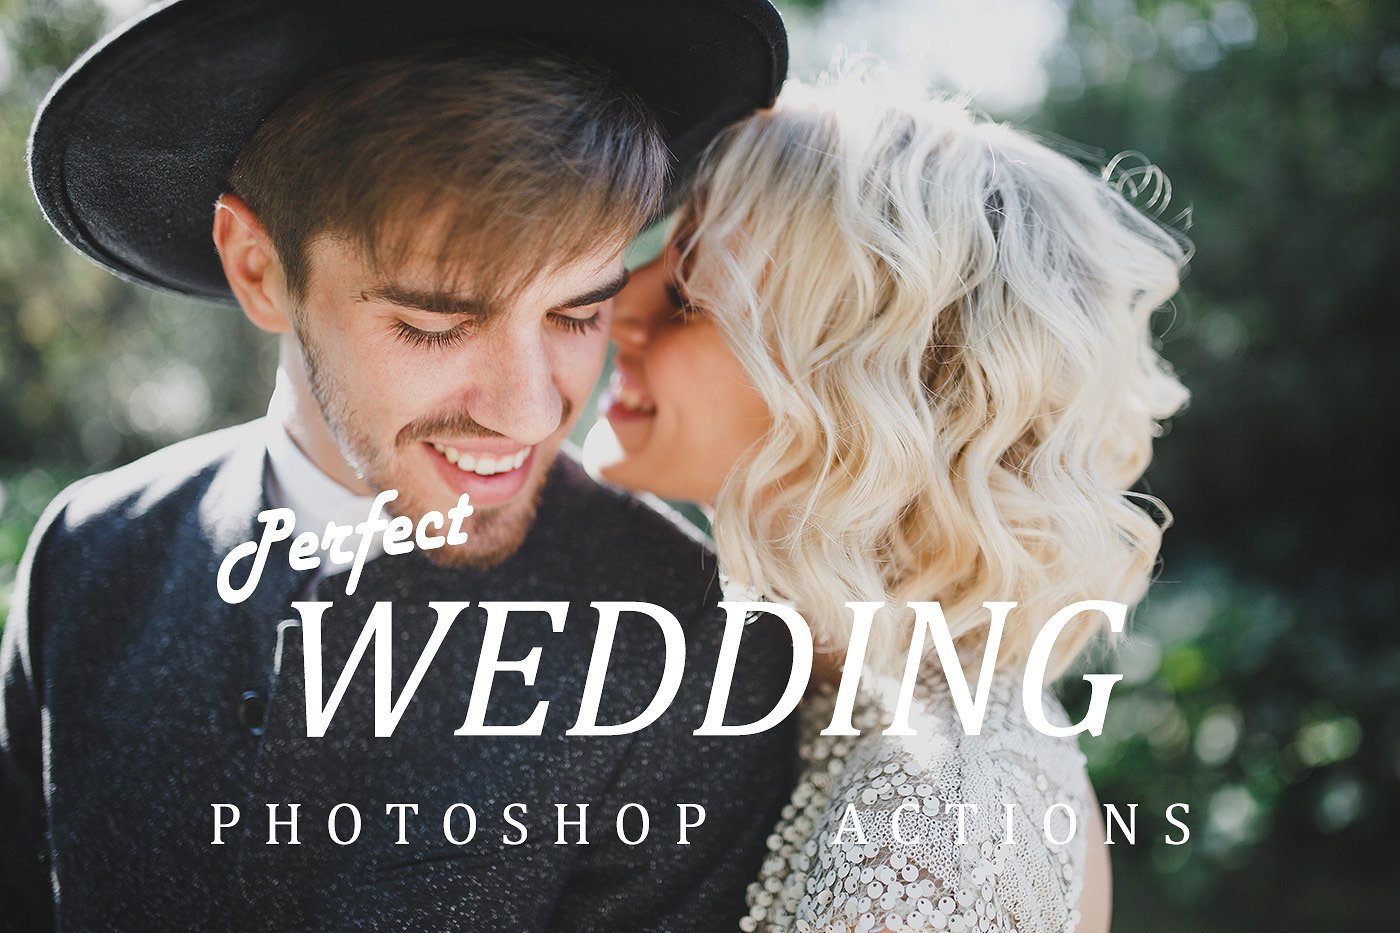 完美婚礼Photoshop动作 Photoshop Wedding Actions插图